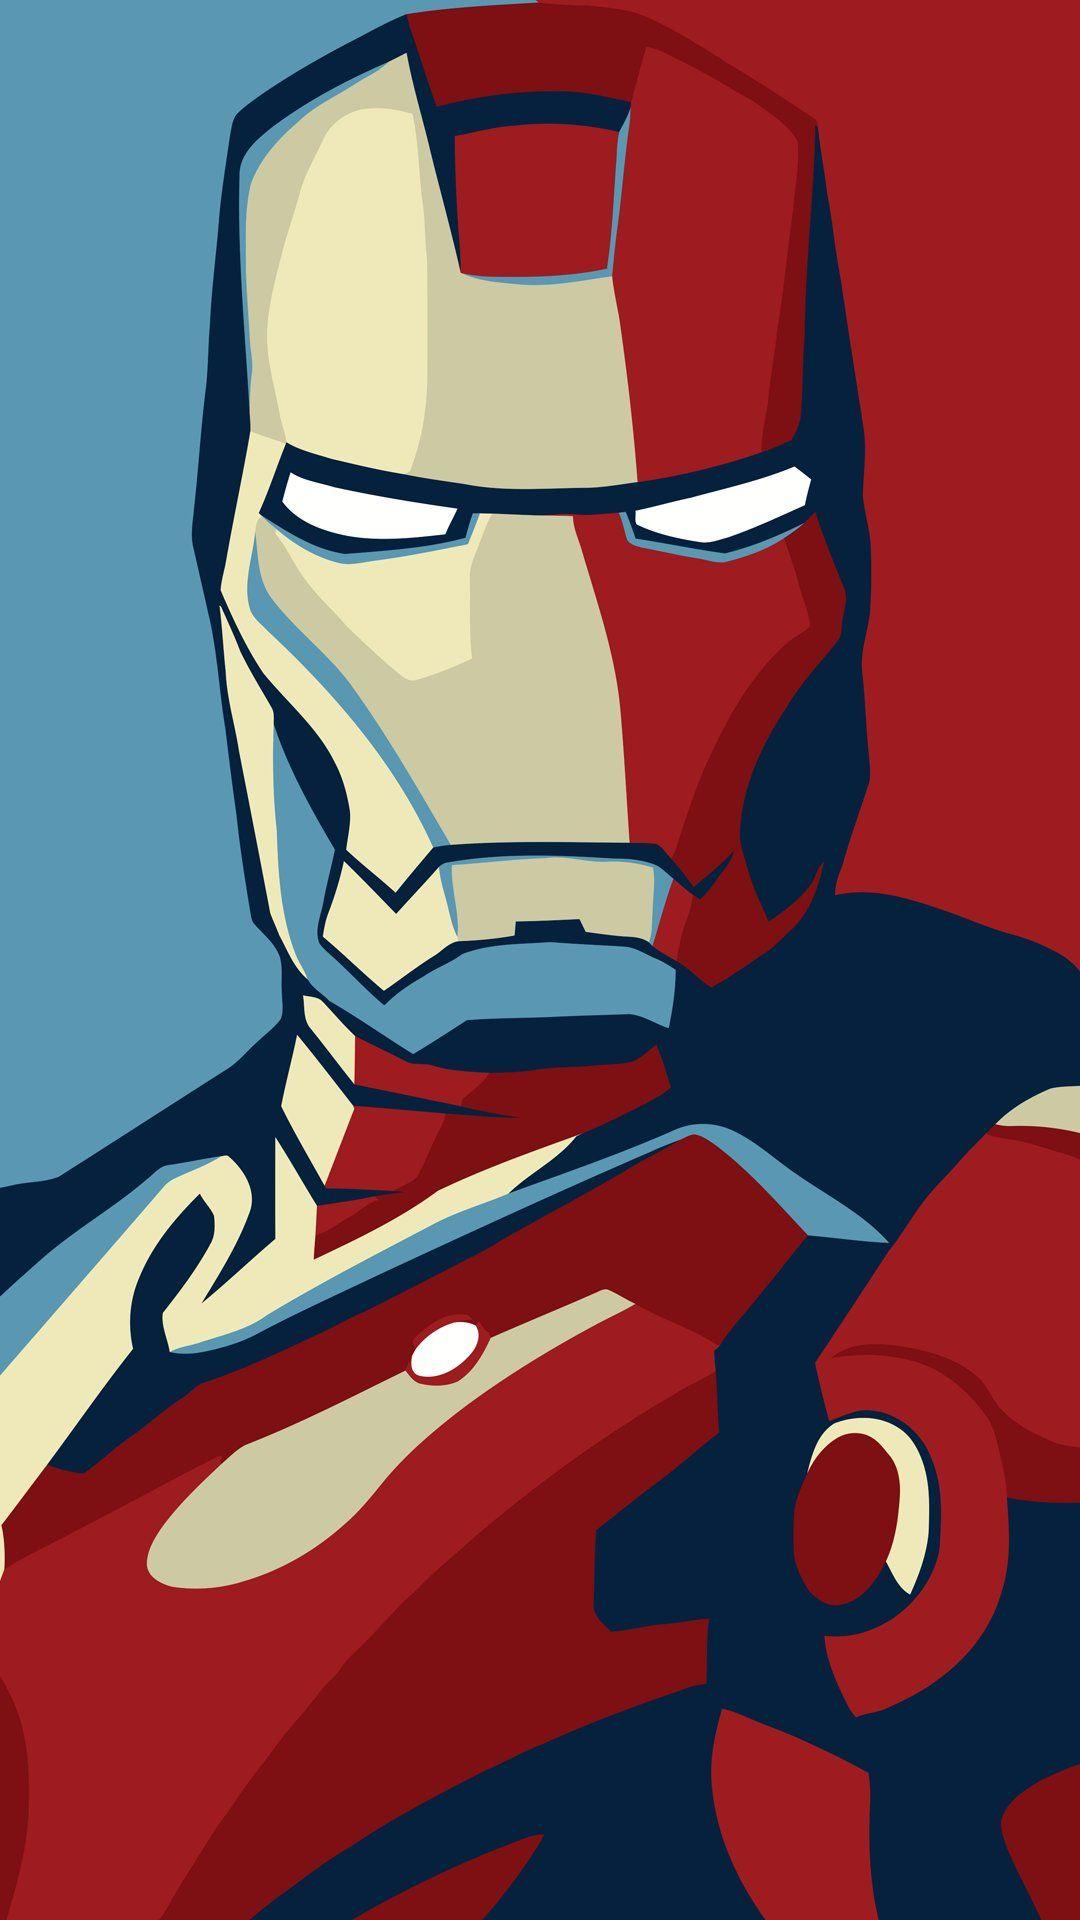 10 HD Iron Man iPhone 6 Wallpapers